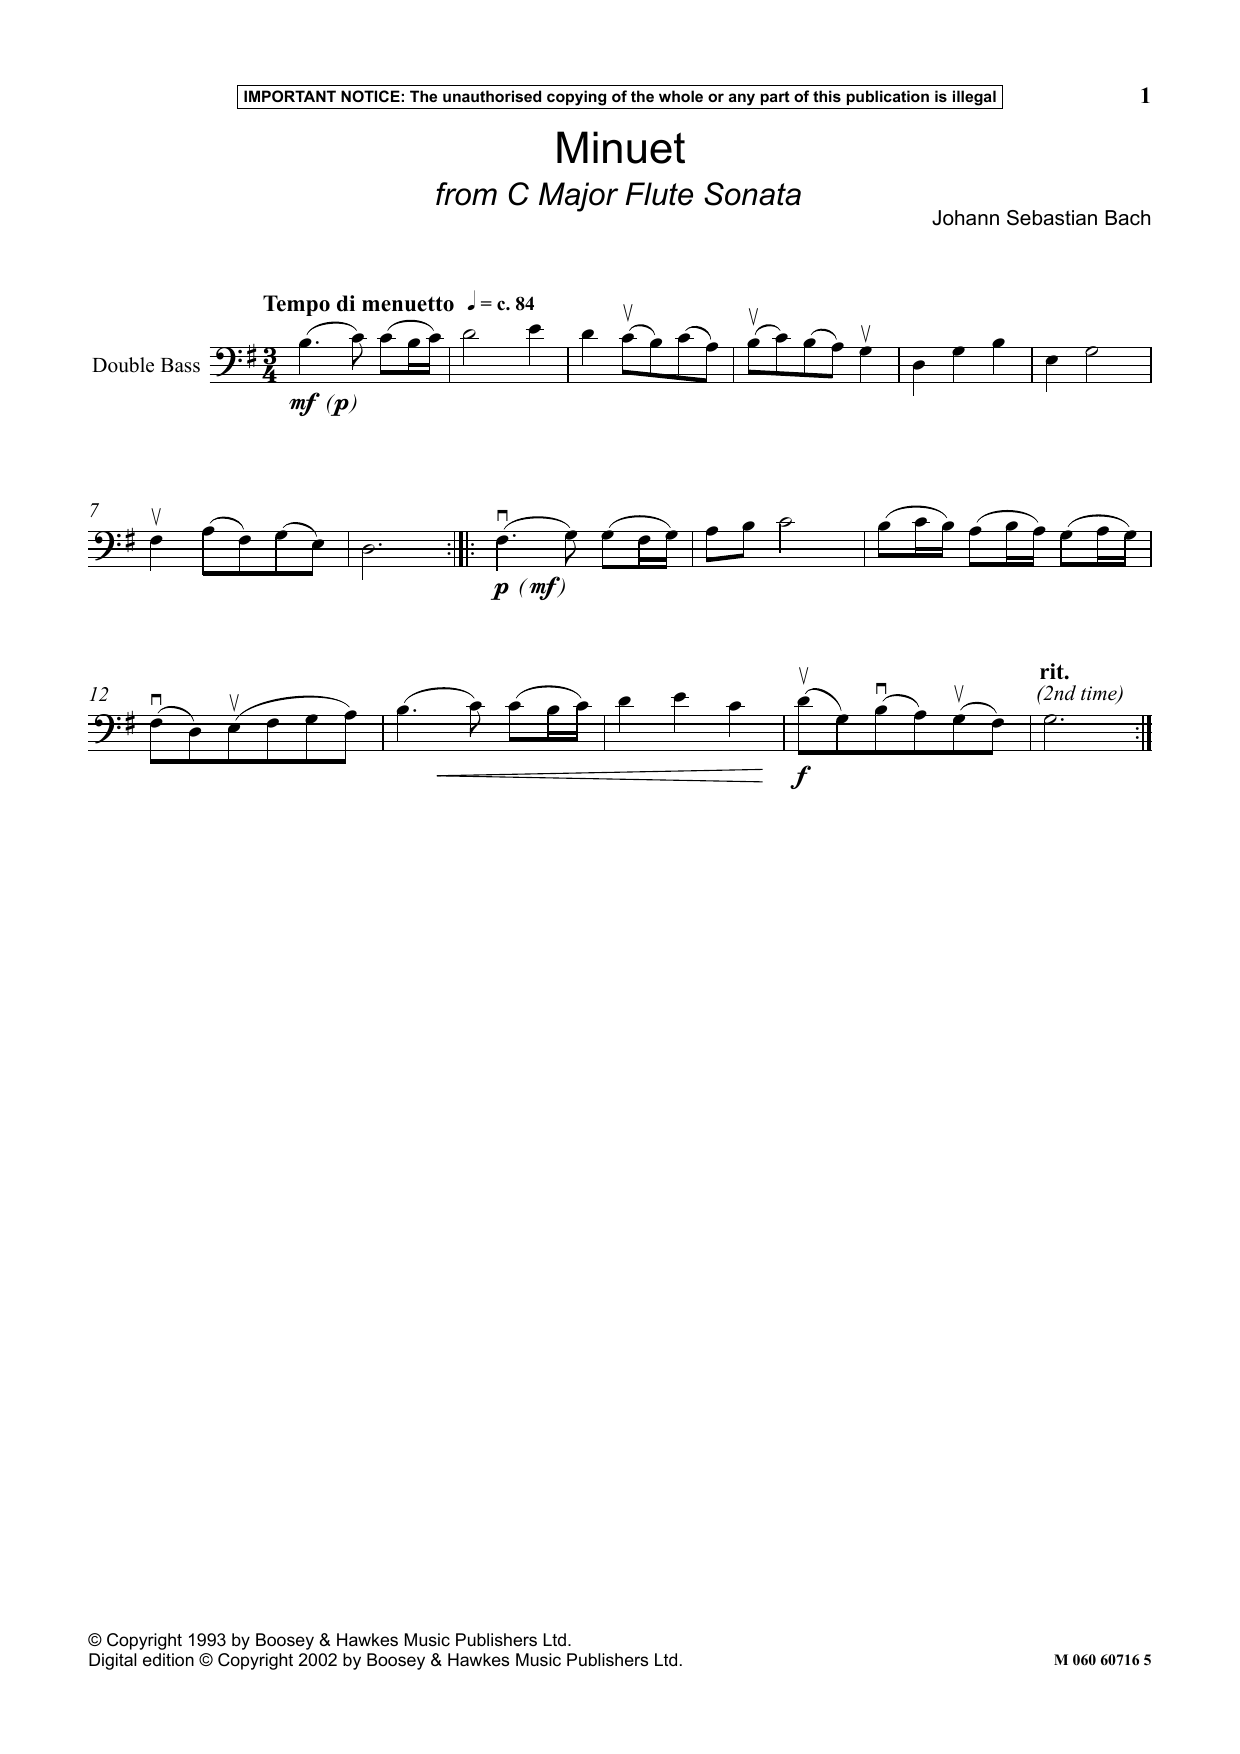 Johann Sebastian Bach Minuet (from C Major Flute Sonata) Sheet Music Notes & Chords for Instrumental Solo - Download or Print PDF